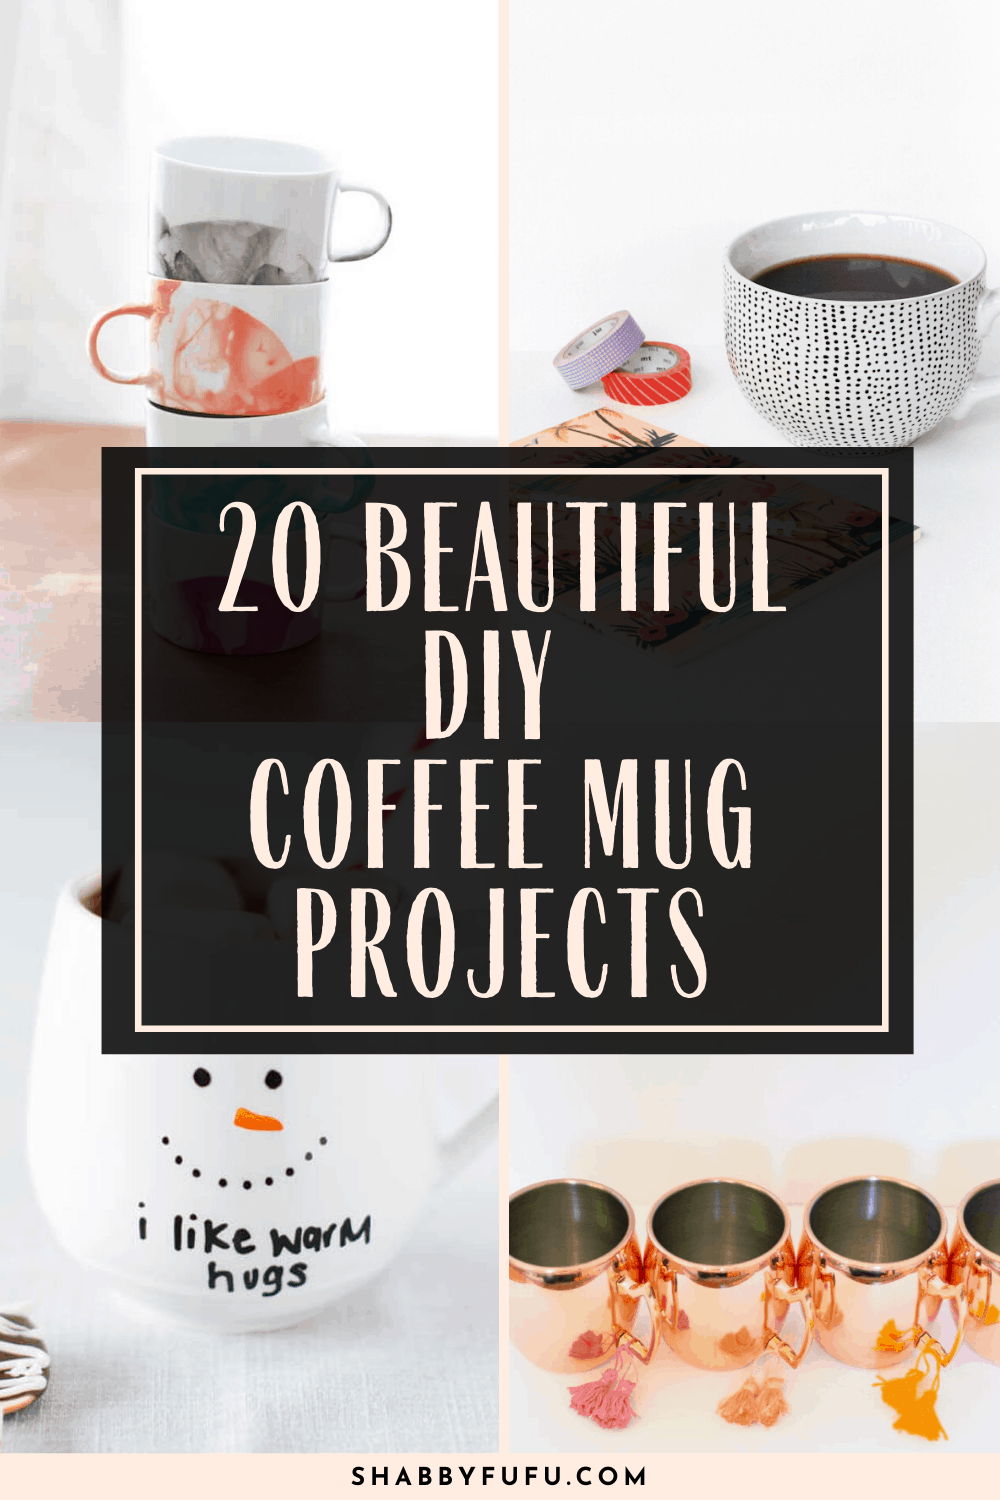 20 Beautiful DIY Coffee Mug Projects